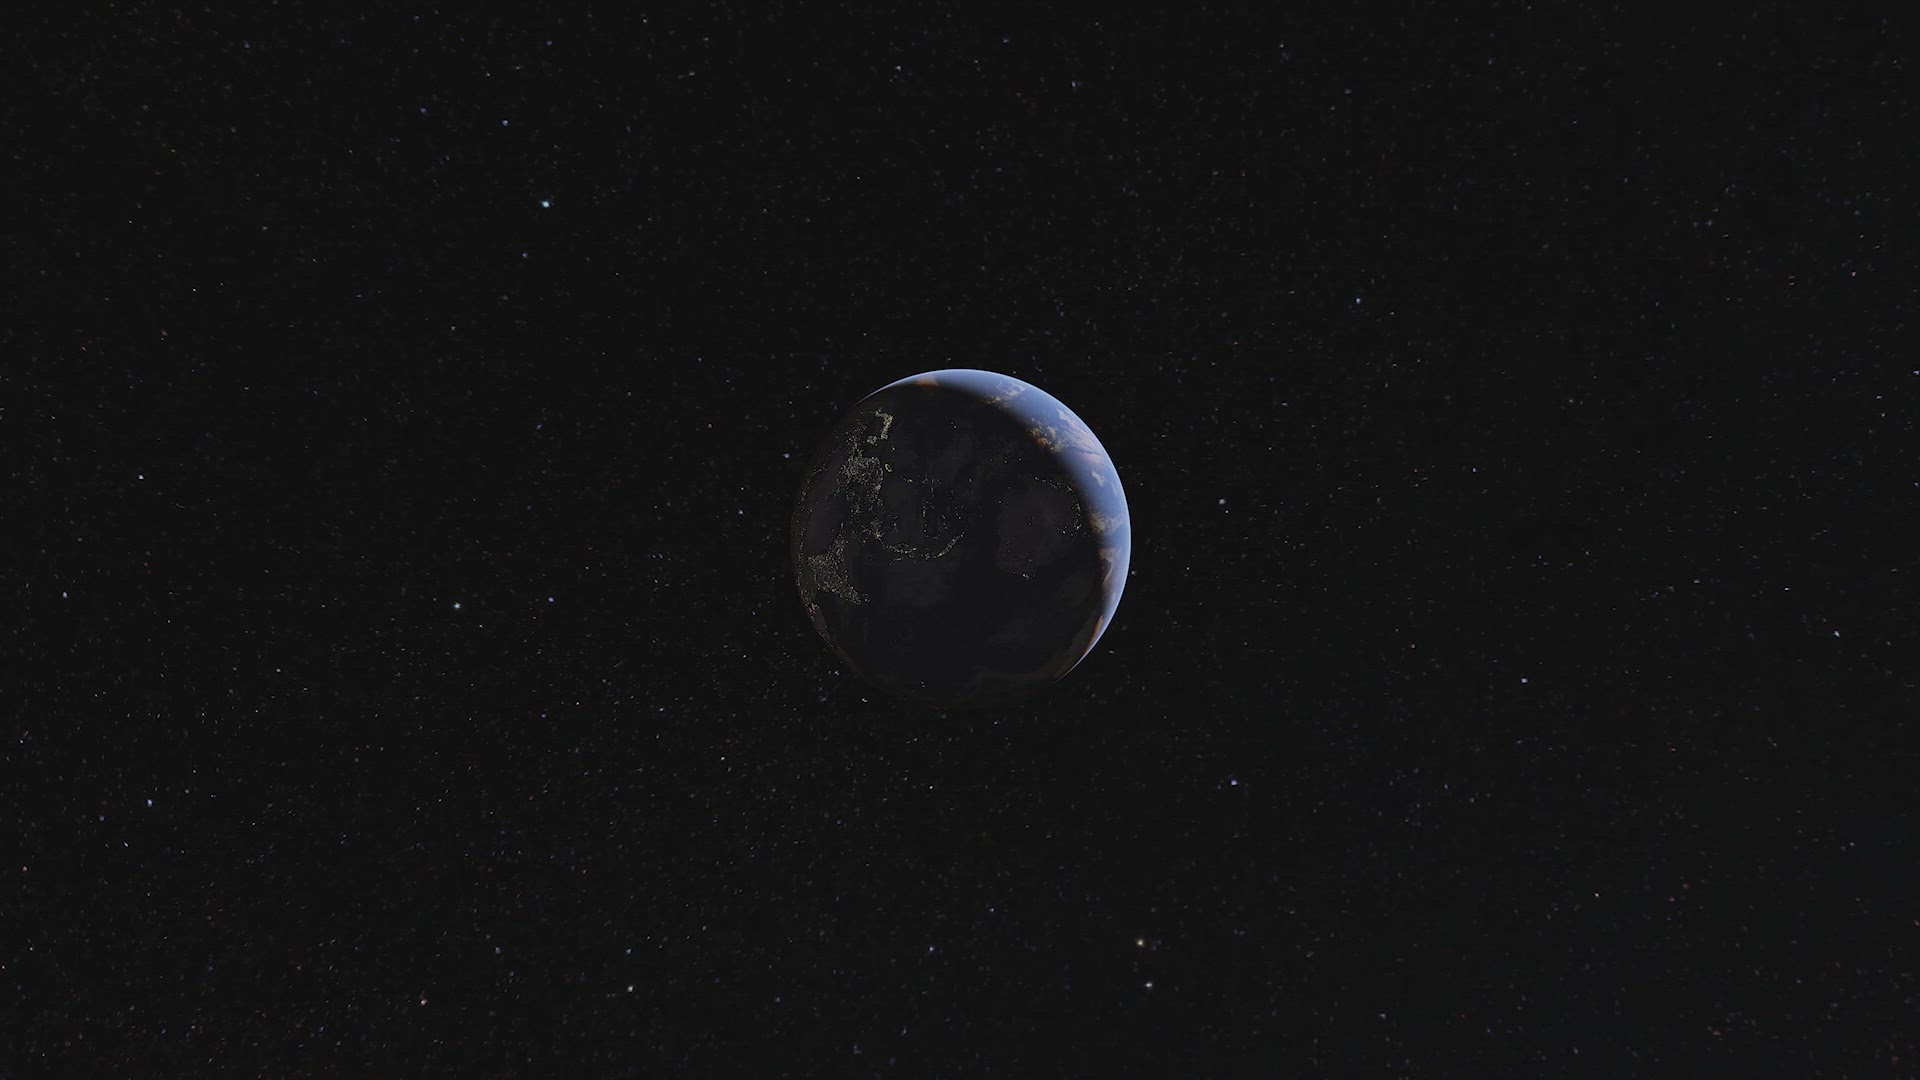 Timelapse in Google Earth